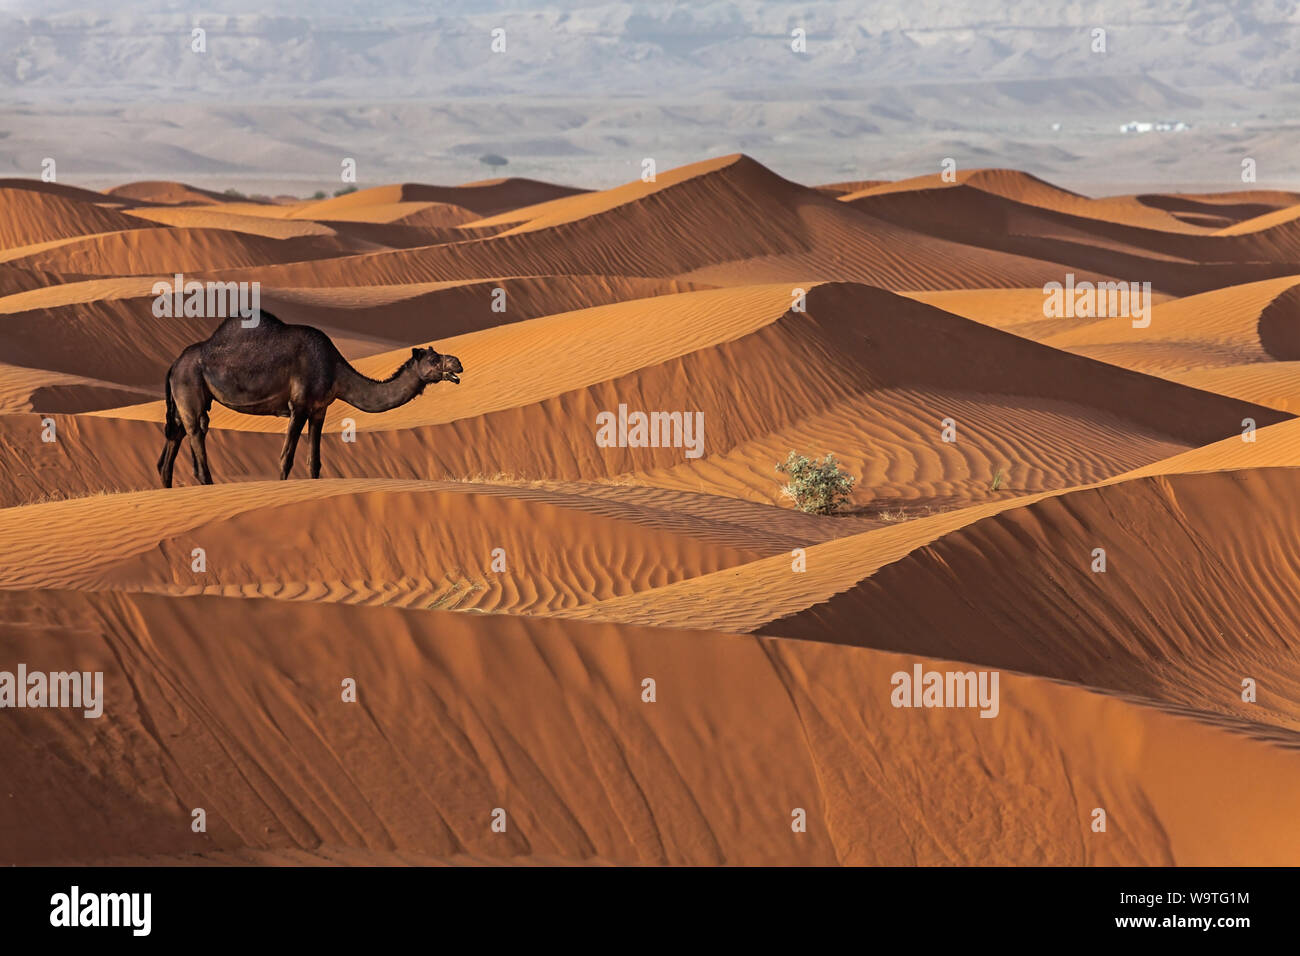 Portrait of a camel in the desert, Riyadh, Saudi Arabia Stock Photo